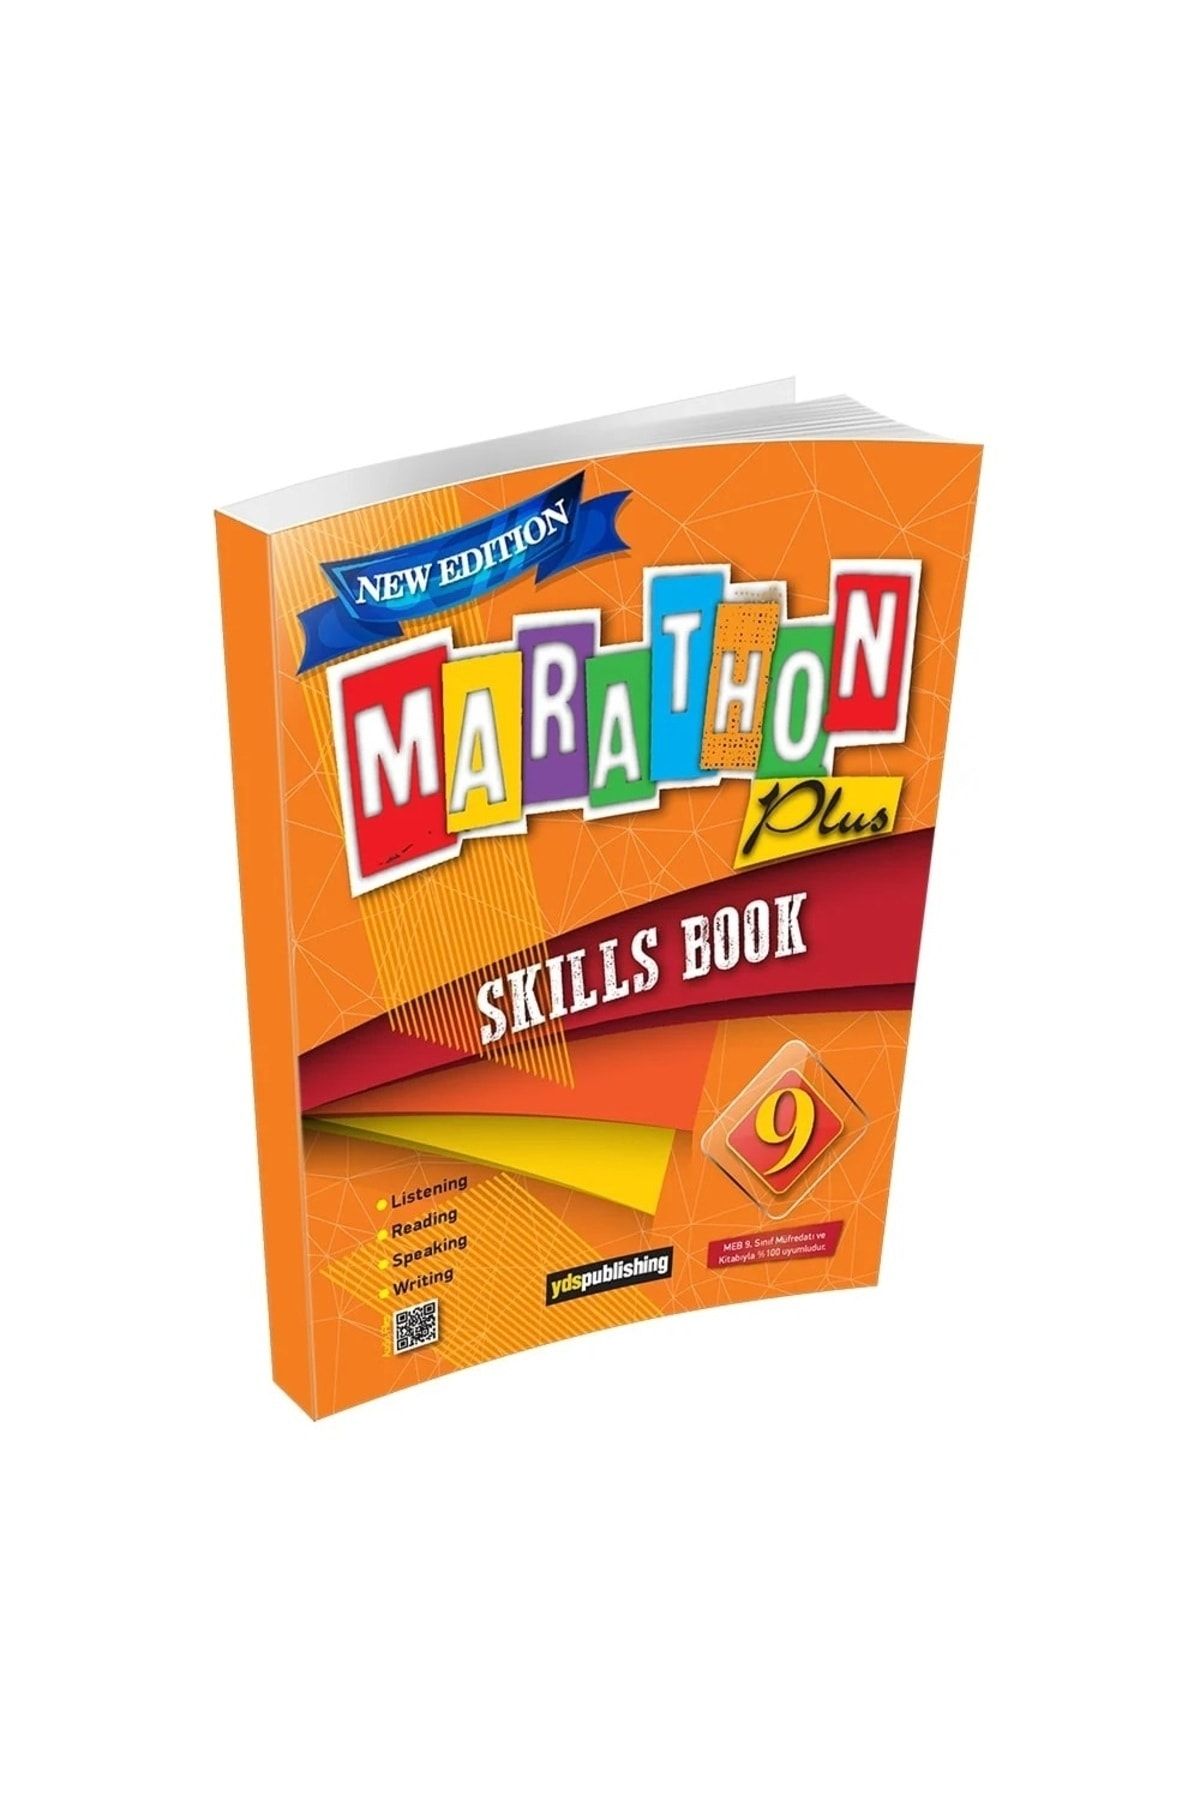 yds publishing New Edition Marathon Plus Grade 9 Skills Book